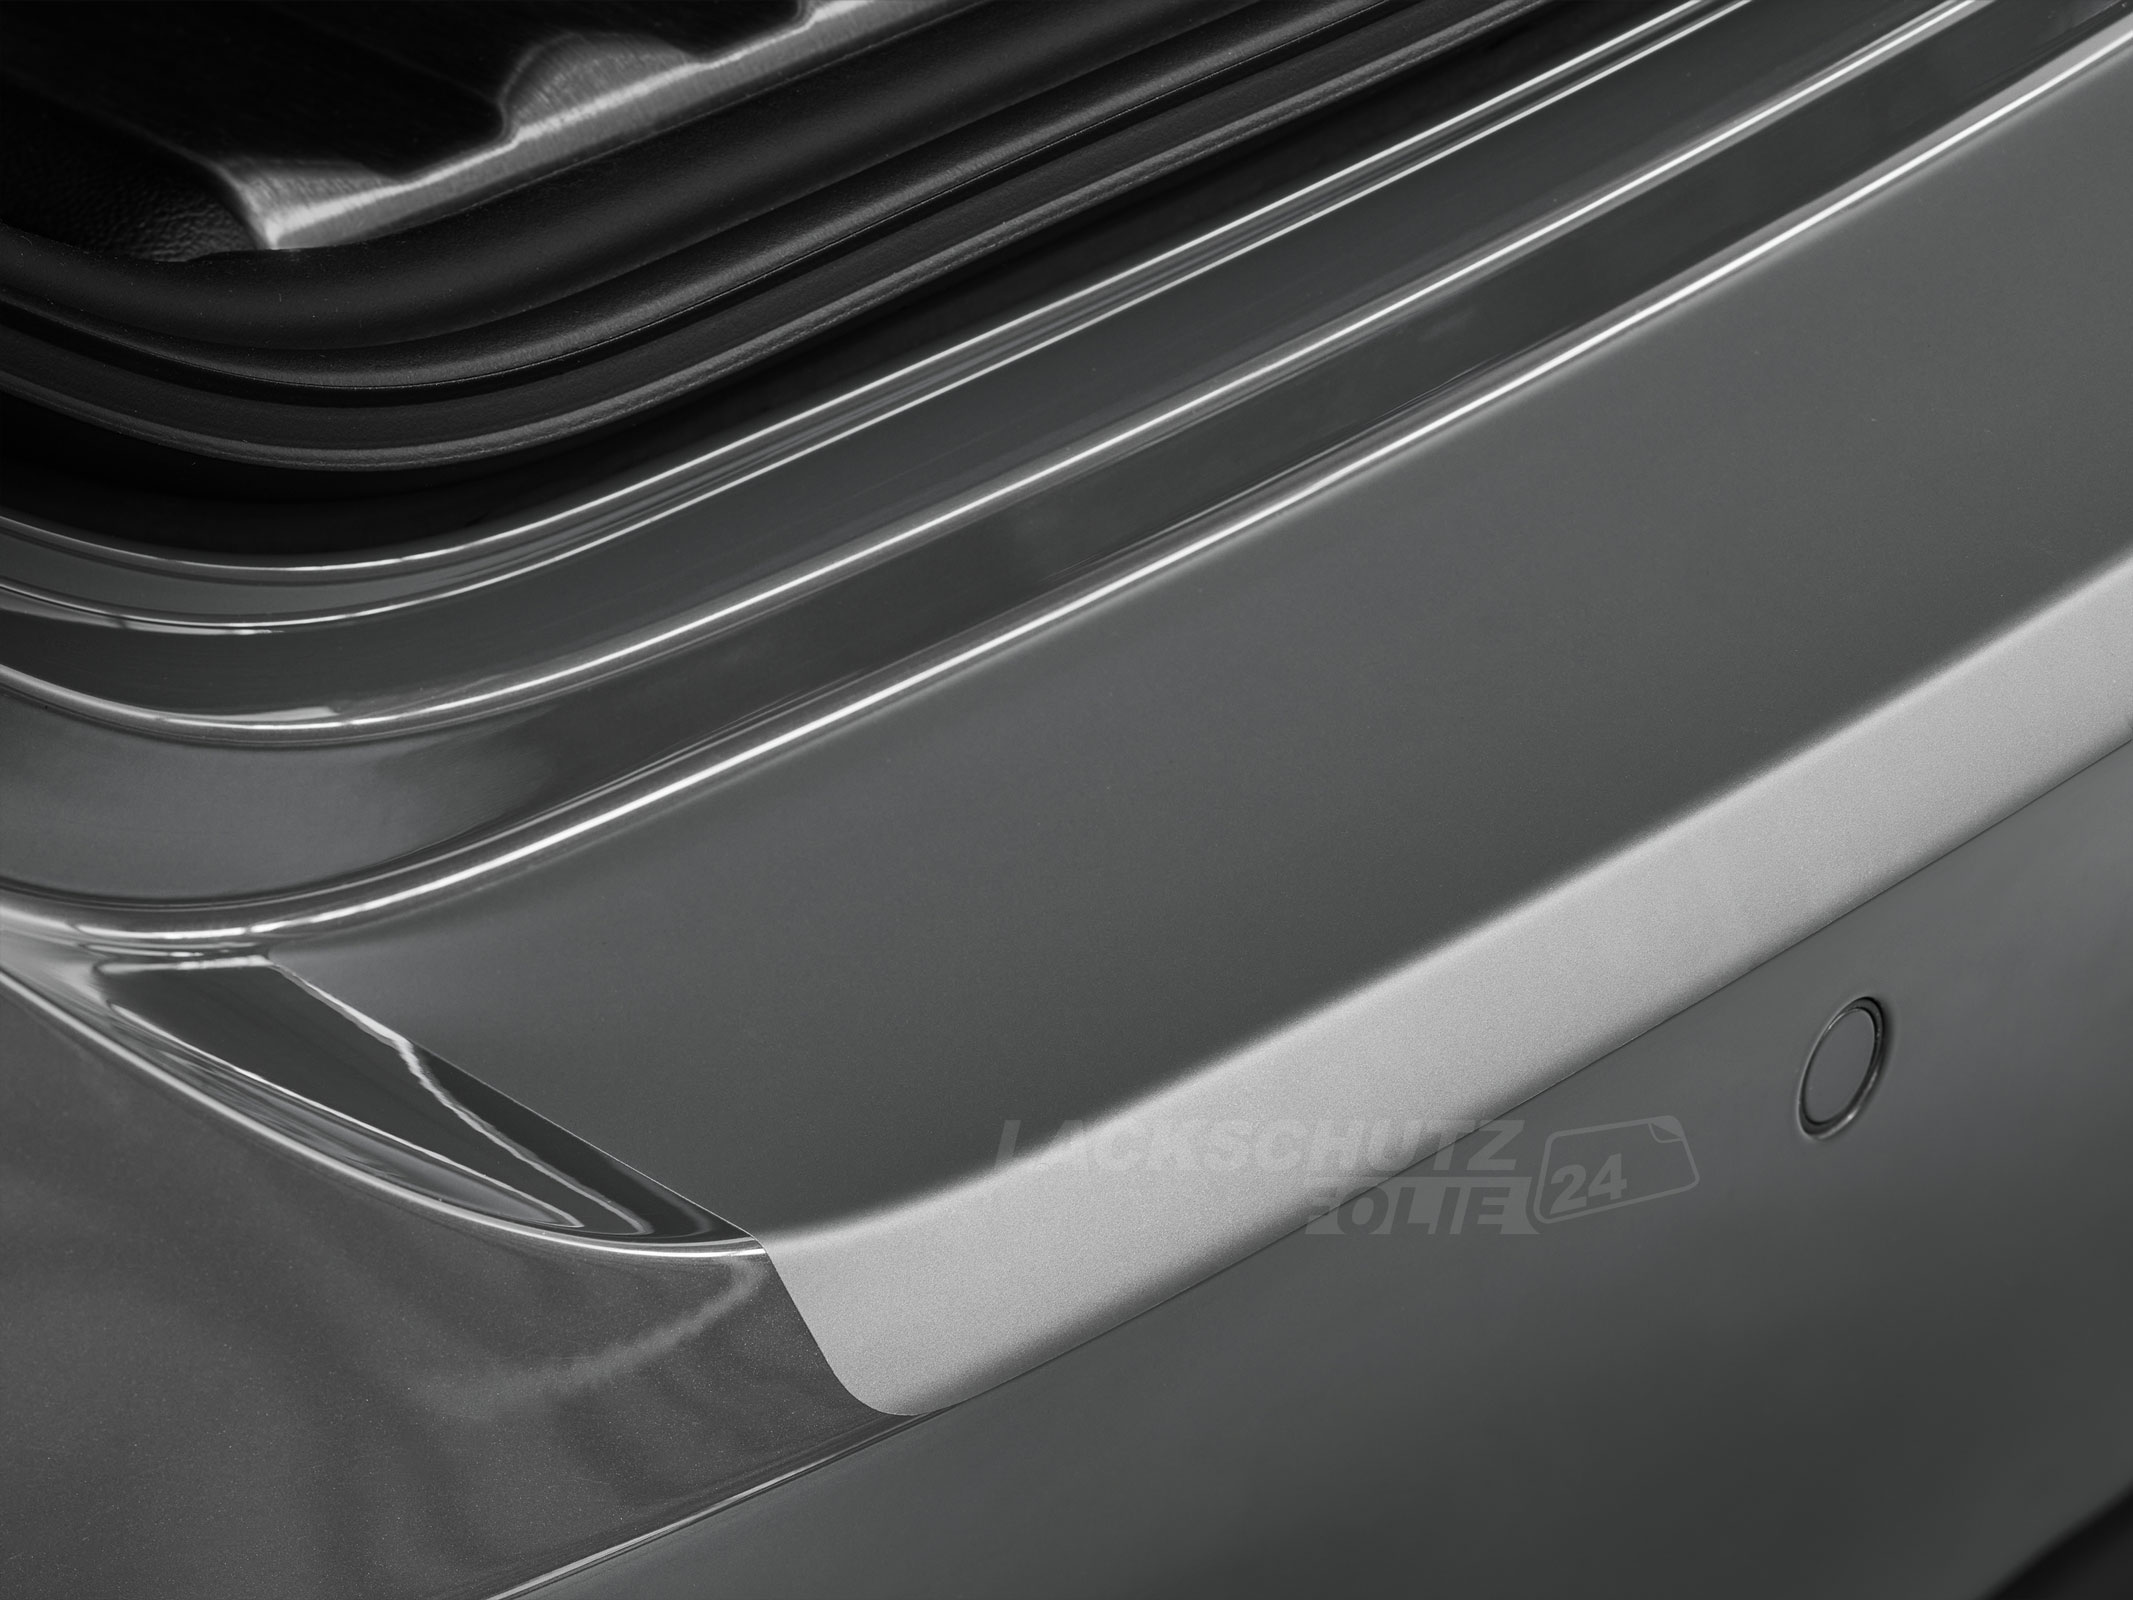 Ladekantenschutzfolie - Transparent Glatt MATT 110 µm stark  für Nissan Note Typ E11, BJ 2005-2013